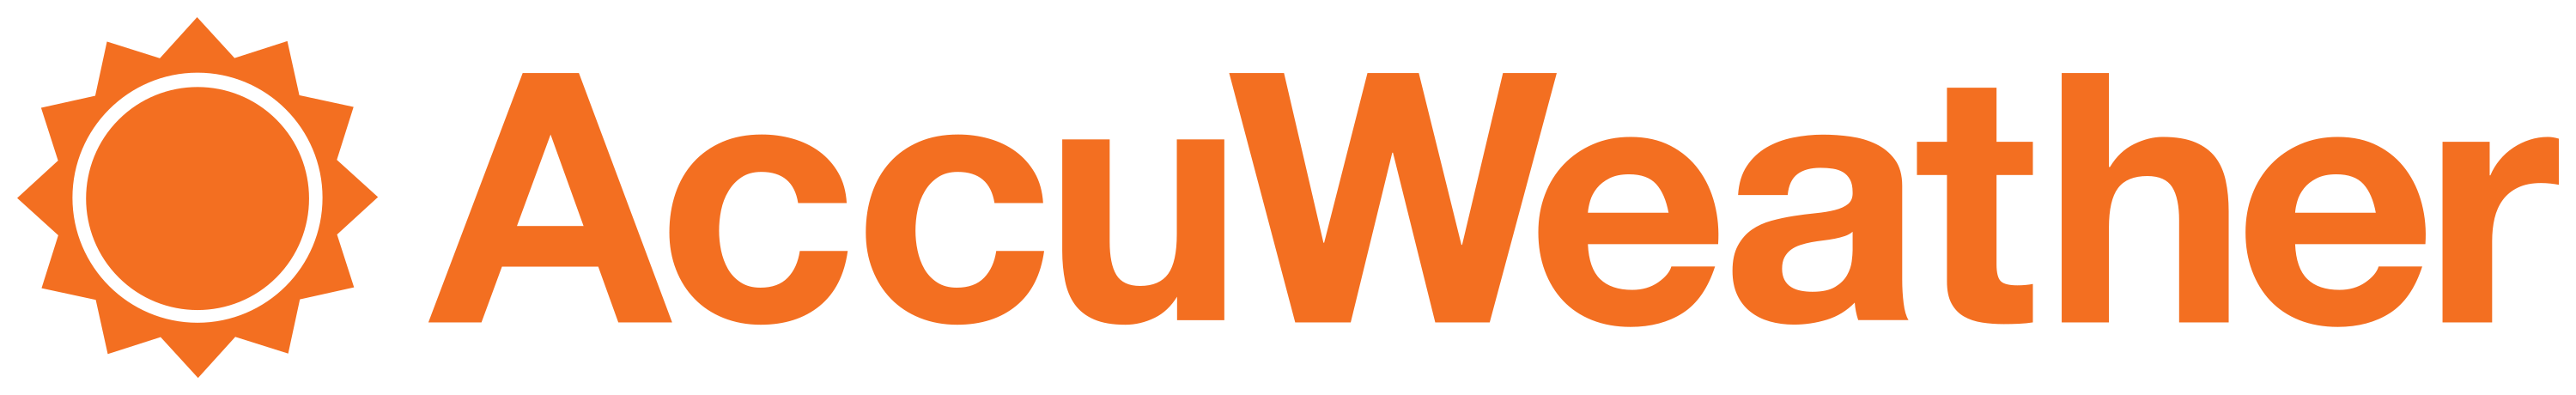 AccuWeather_Logo.svg